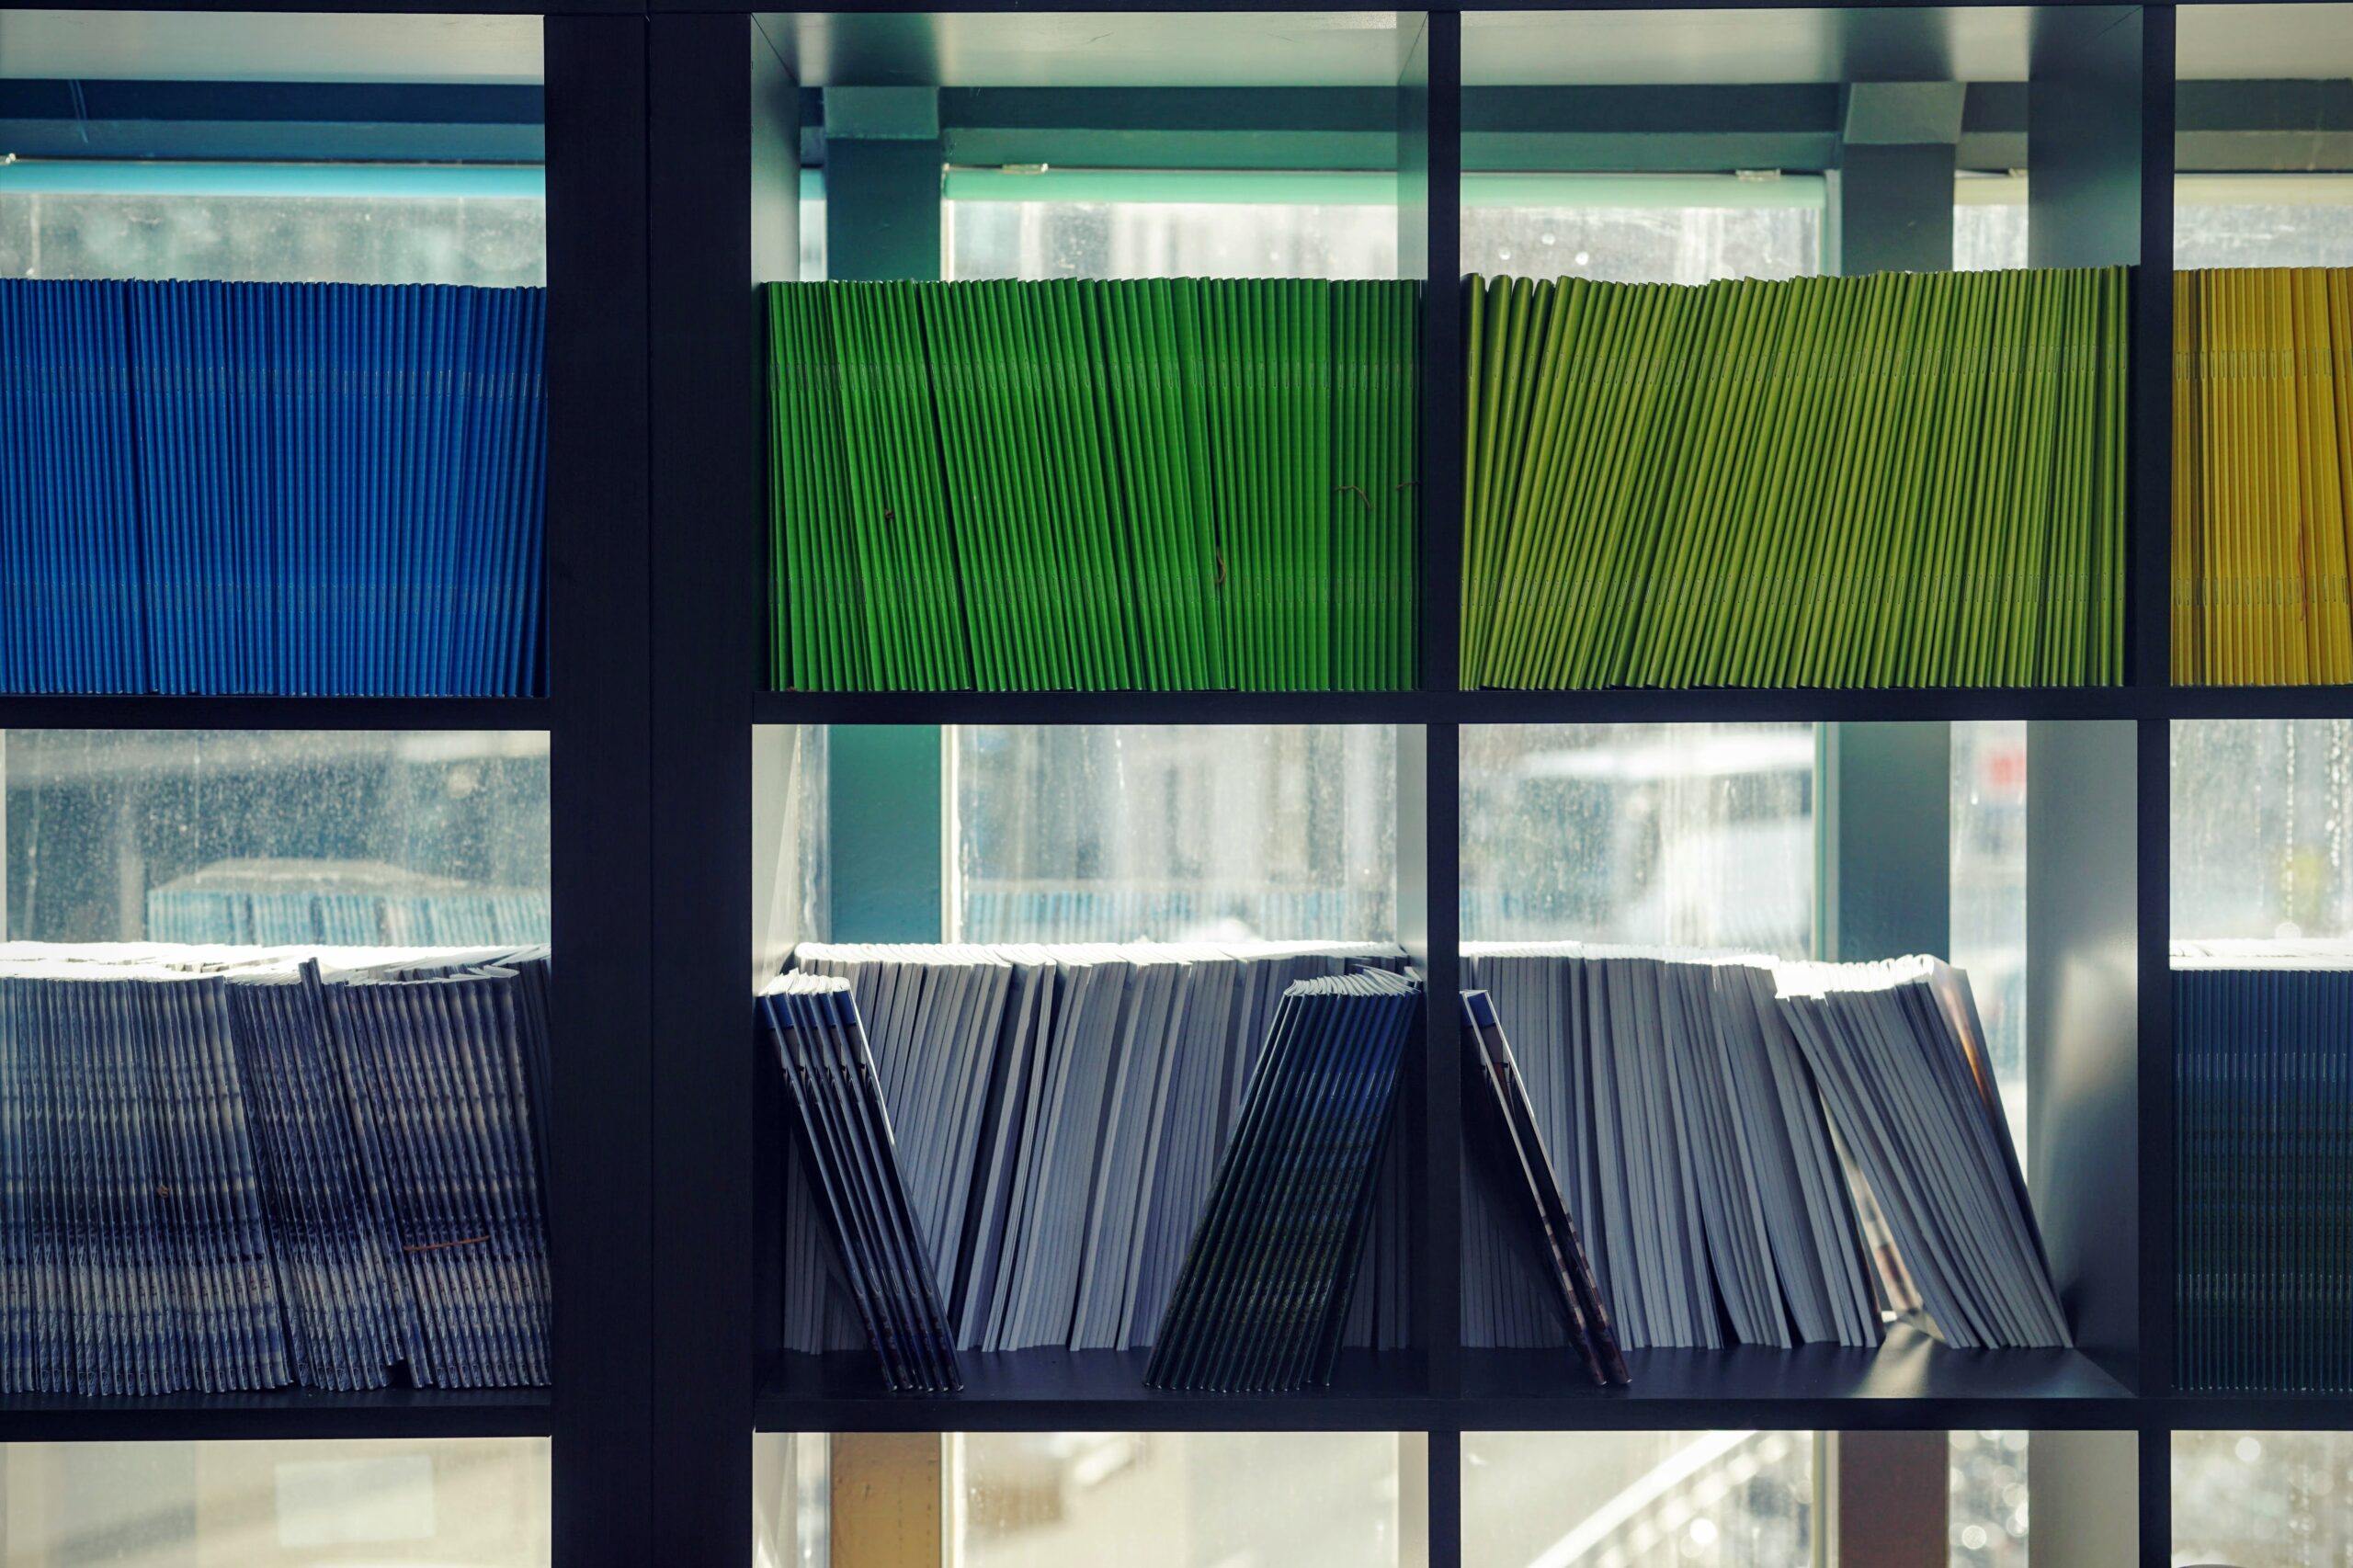 Multicolored files on a bookshelf